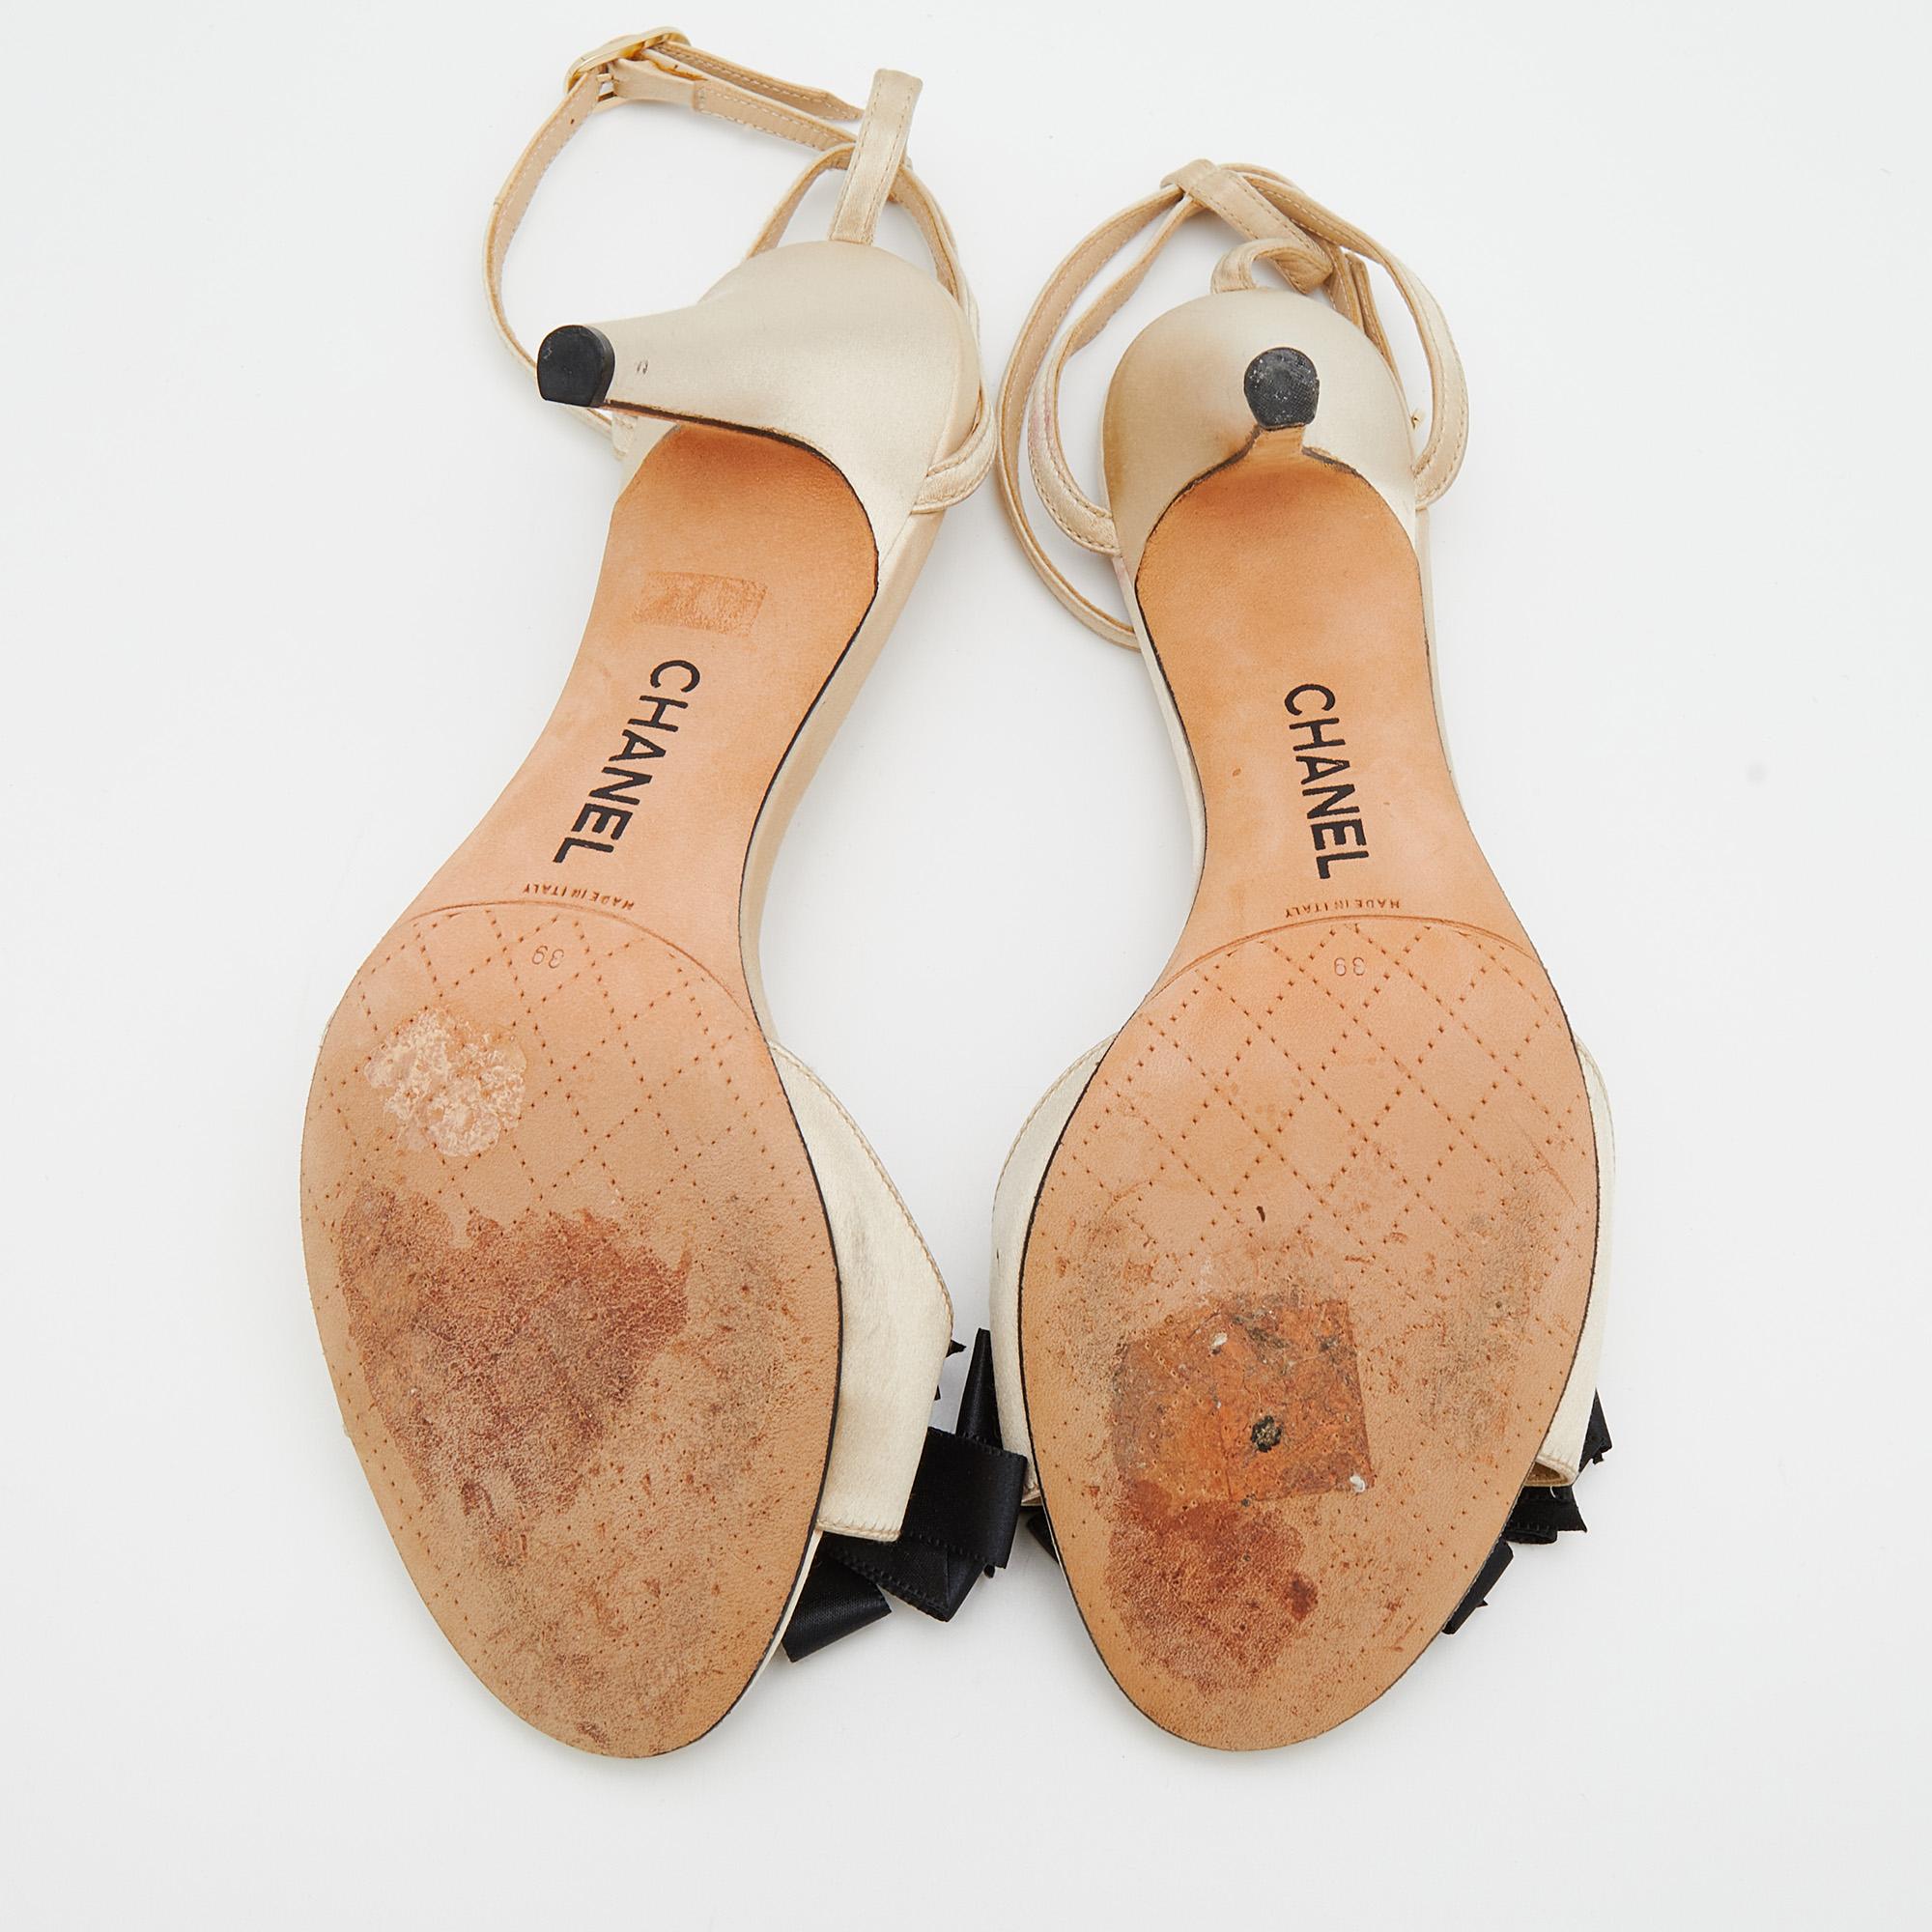 Chanel Light Beige Satin CC Bow Ankle Strap Sandals Size 39 1